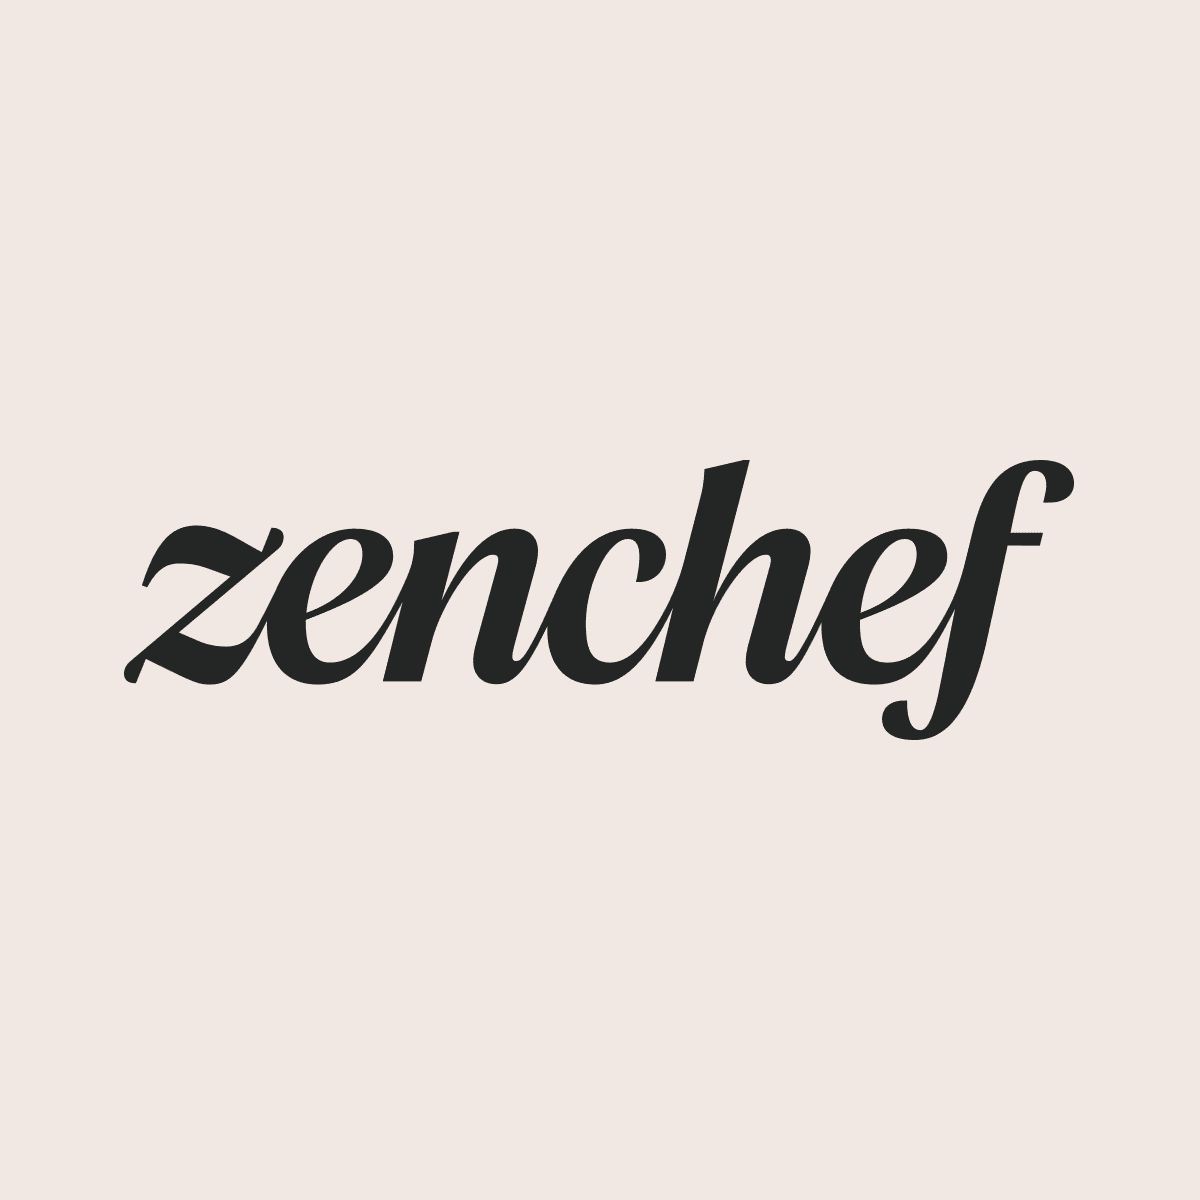 ZENCHEF